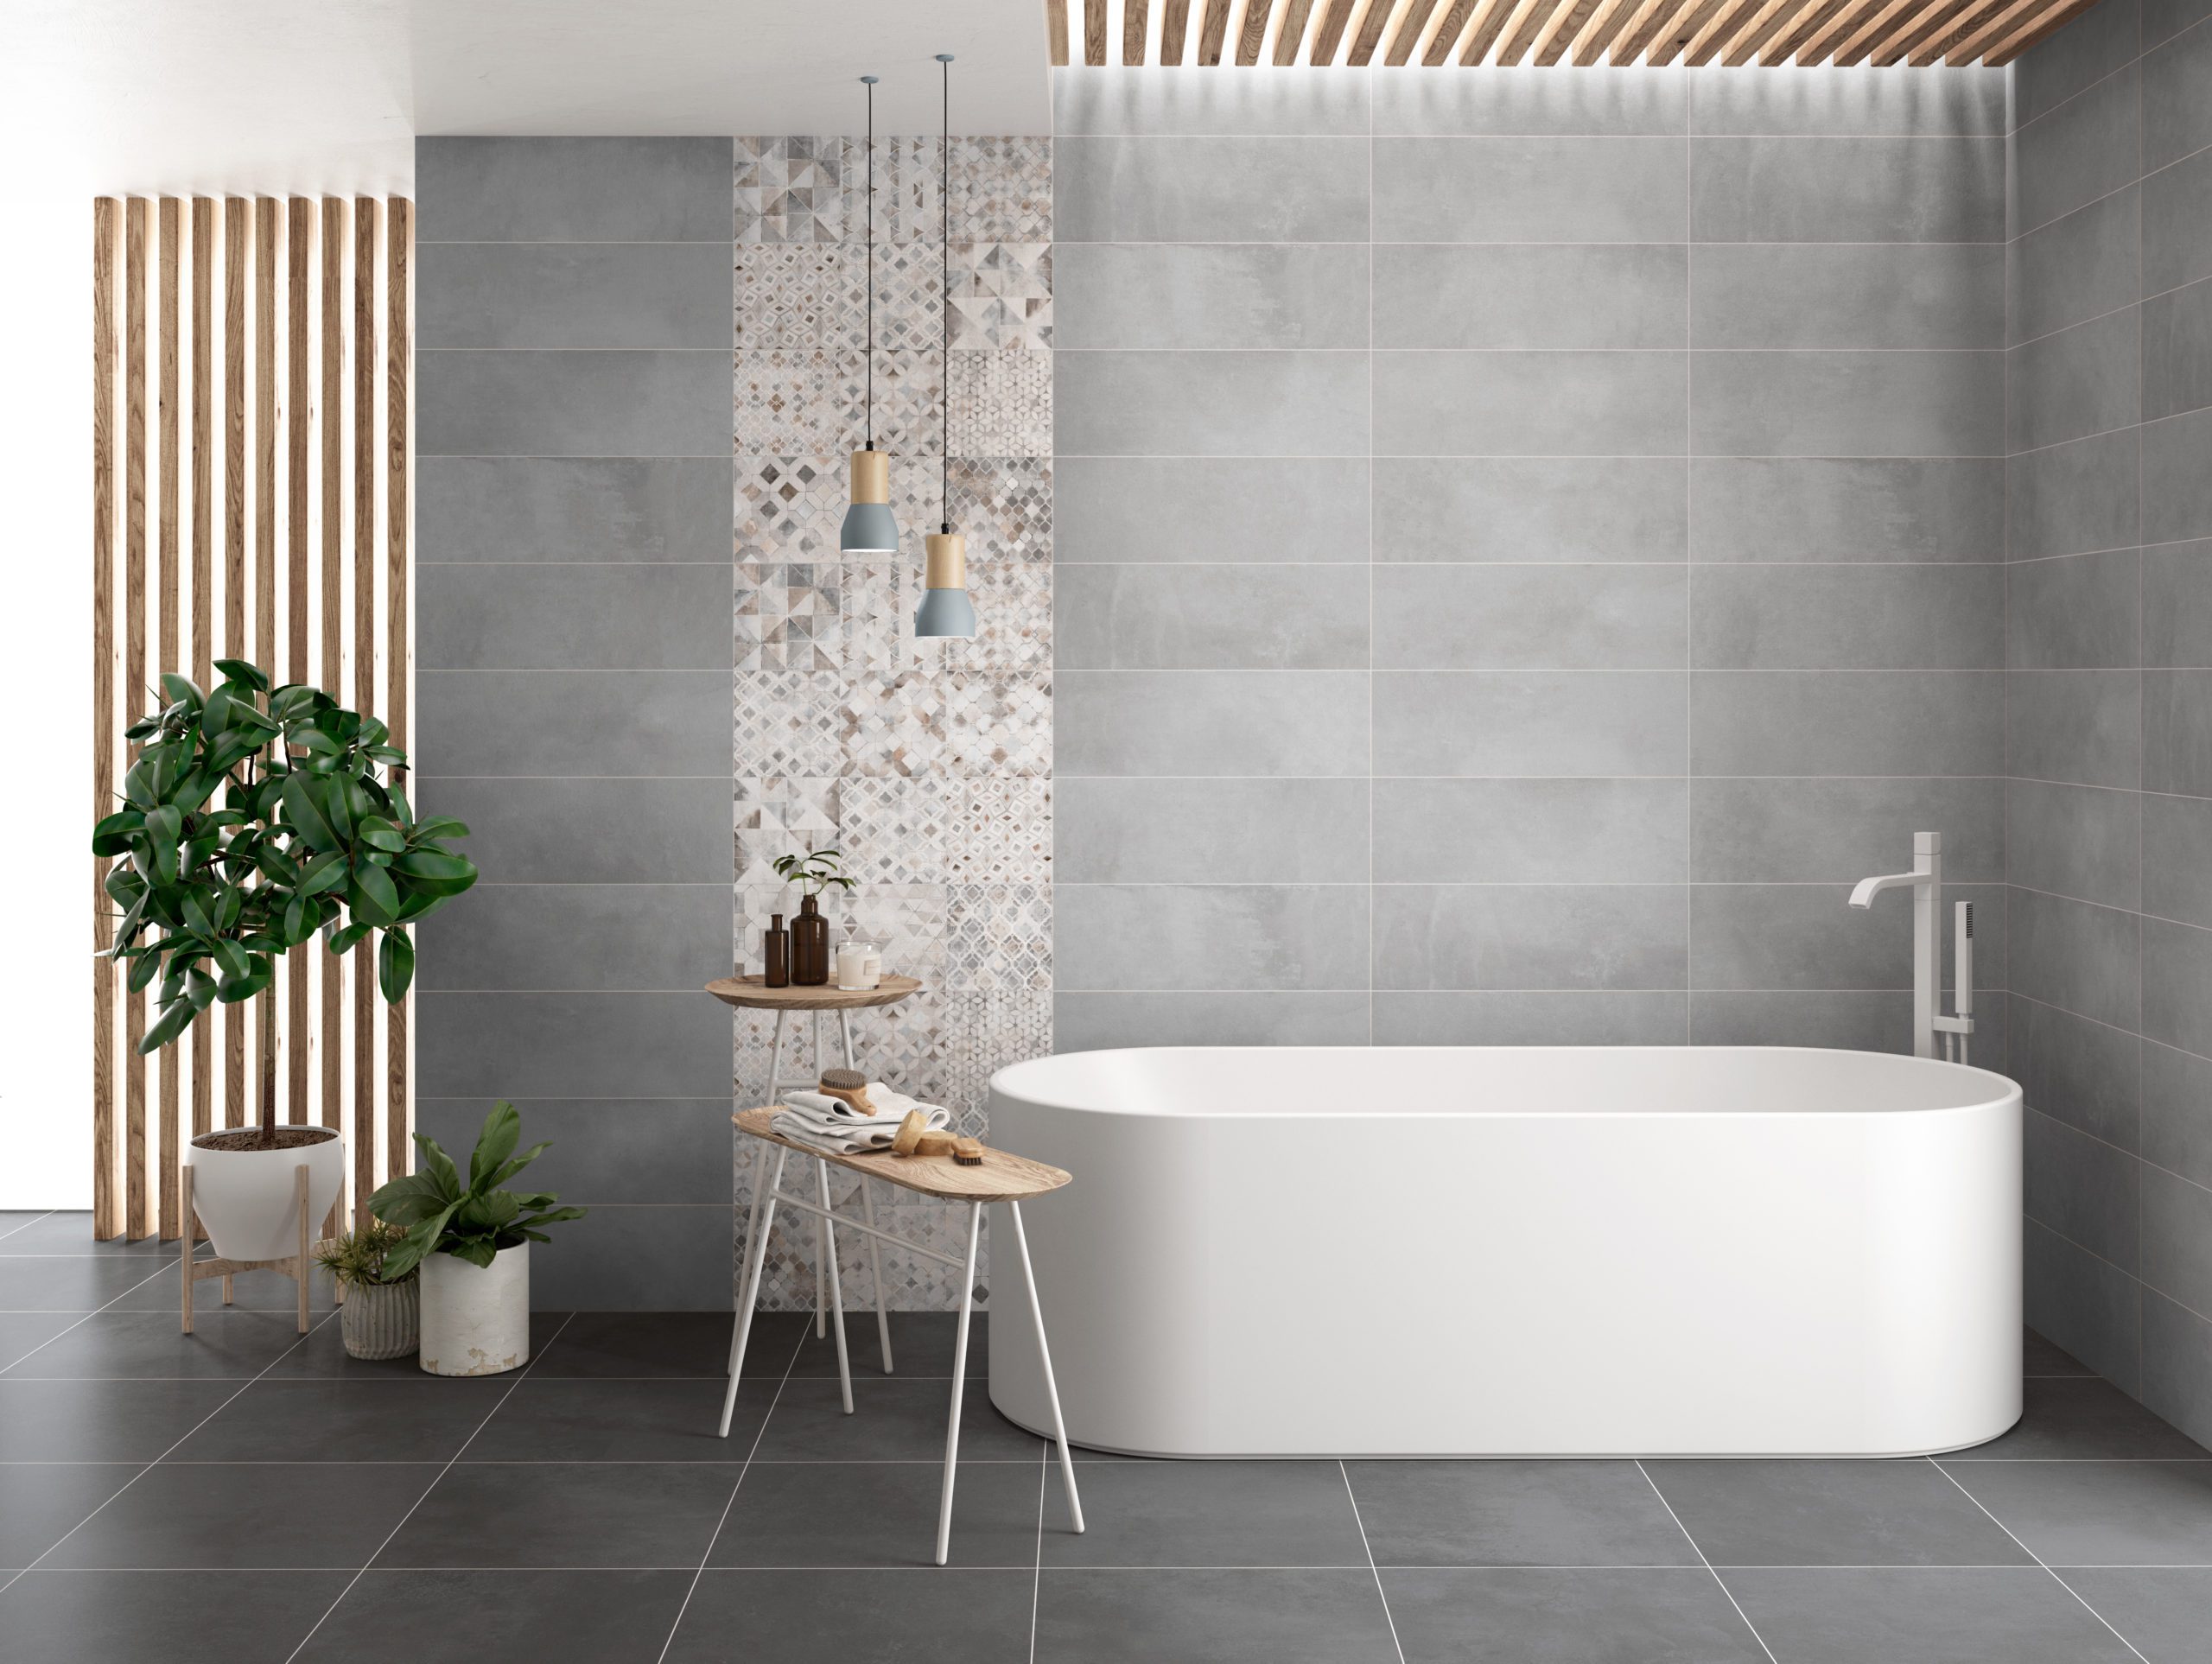 Caen Bathroom Tiles btw baths tiles woodfloors